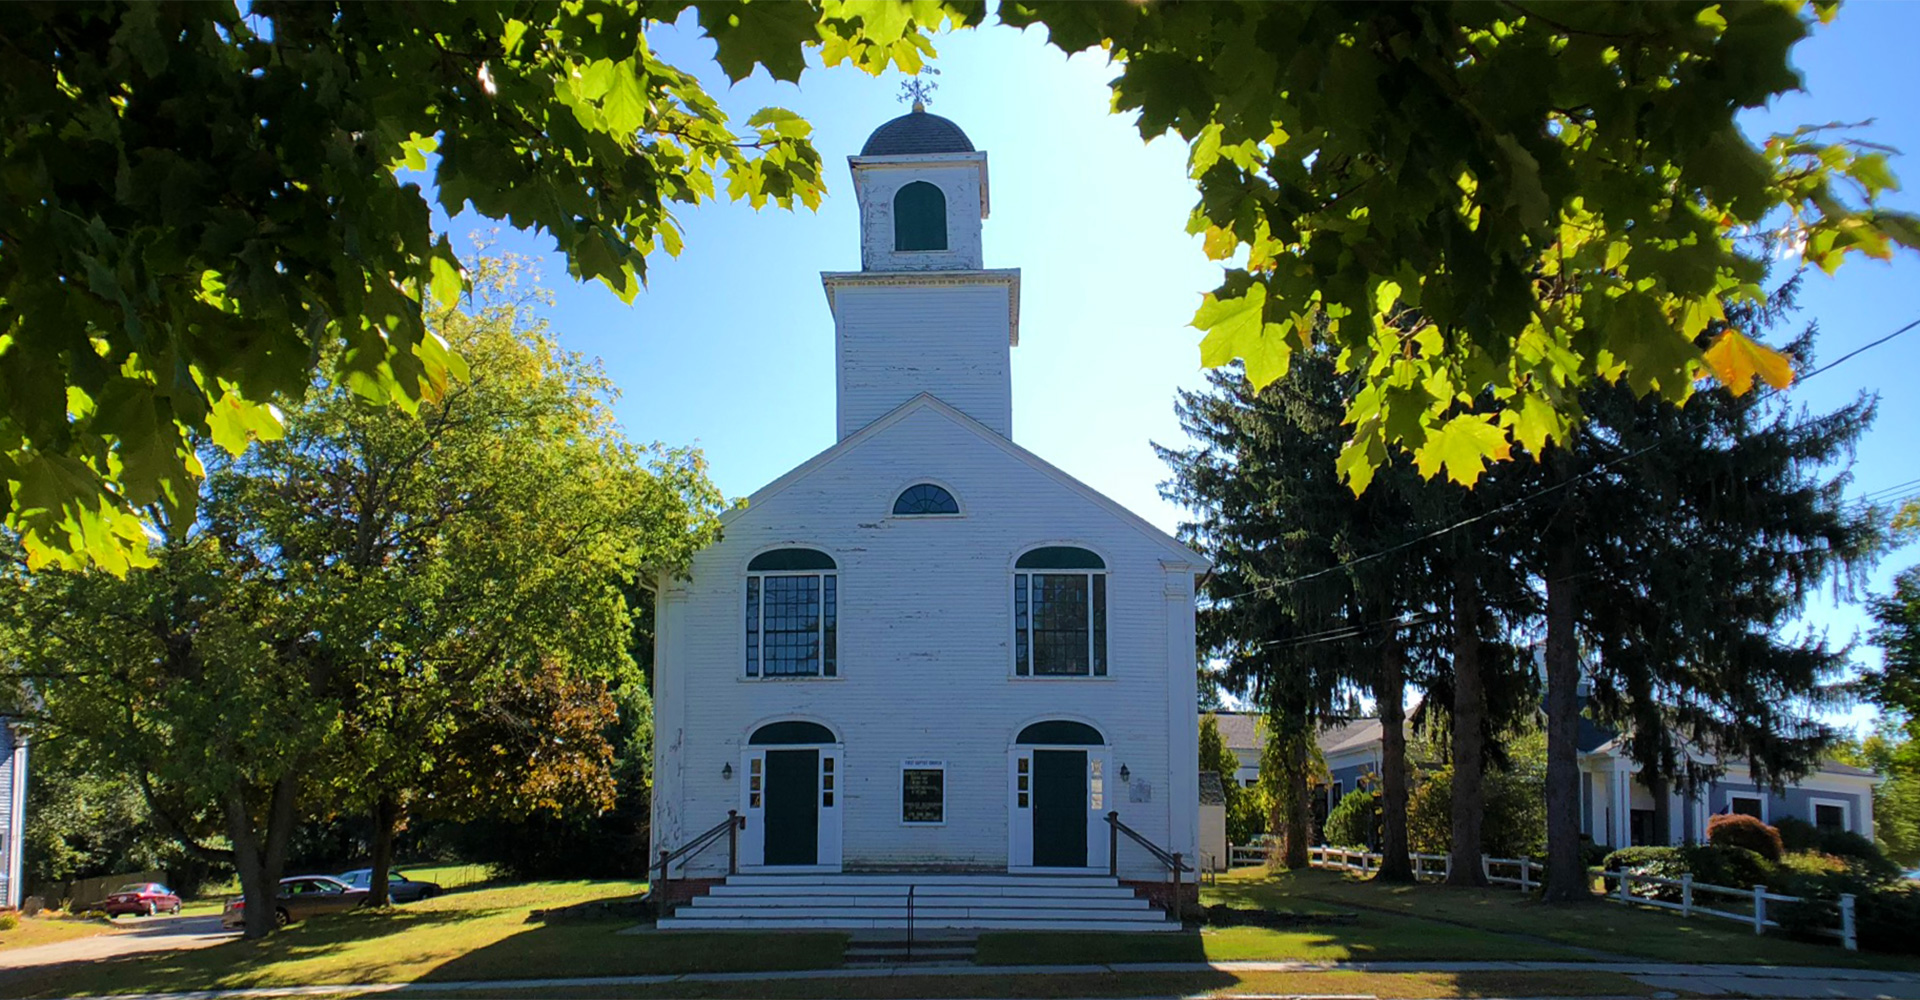 Rowley's First Baptist Church